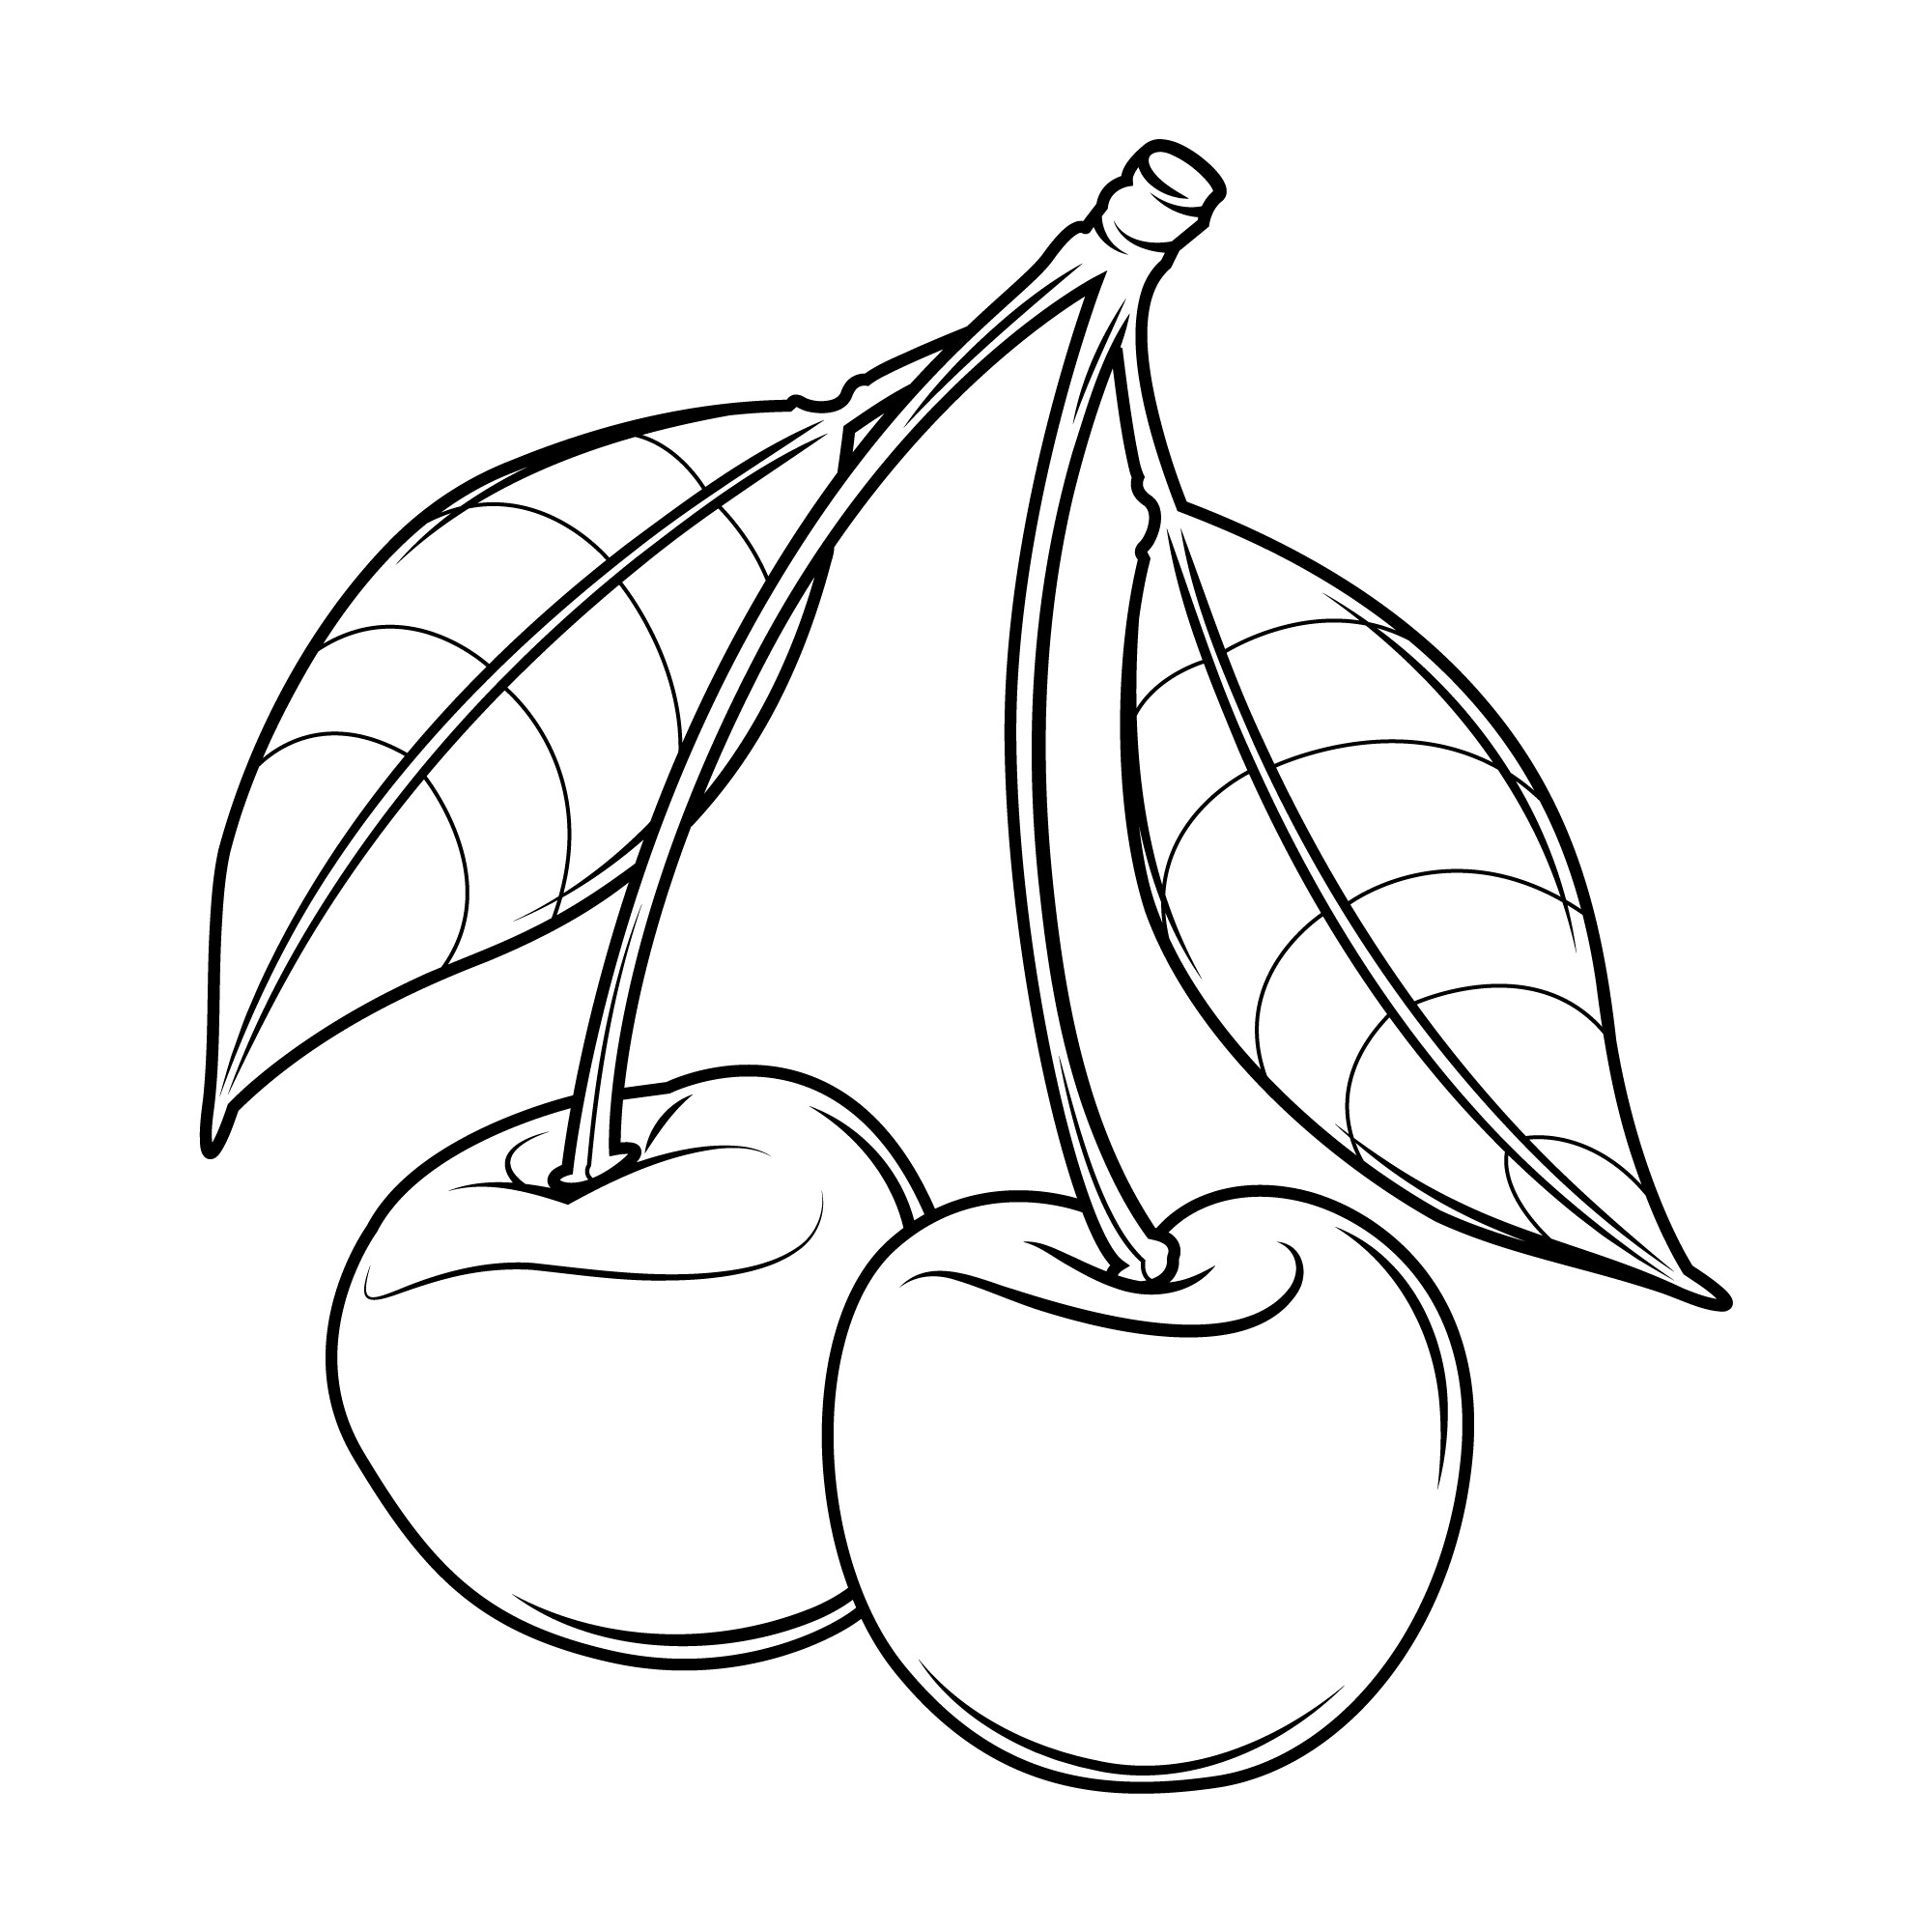 Раскраска для детей: вишня на ветке с листиками